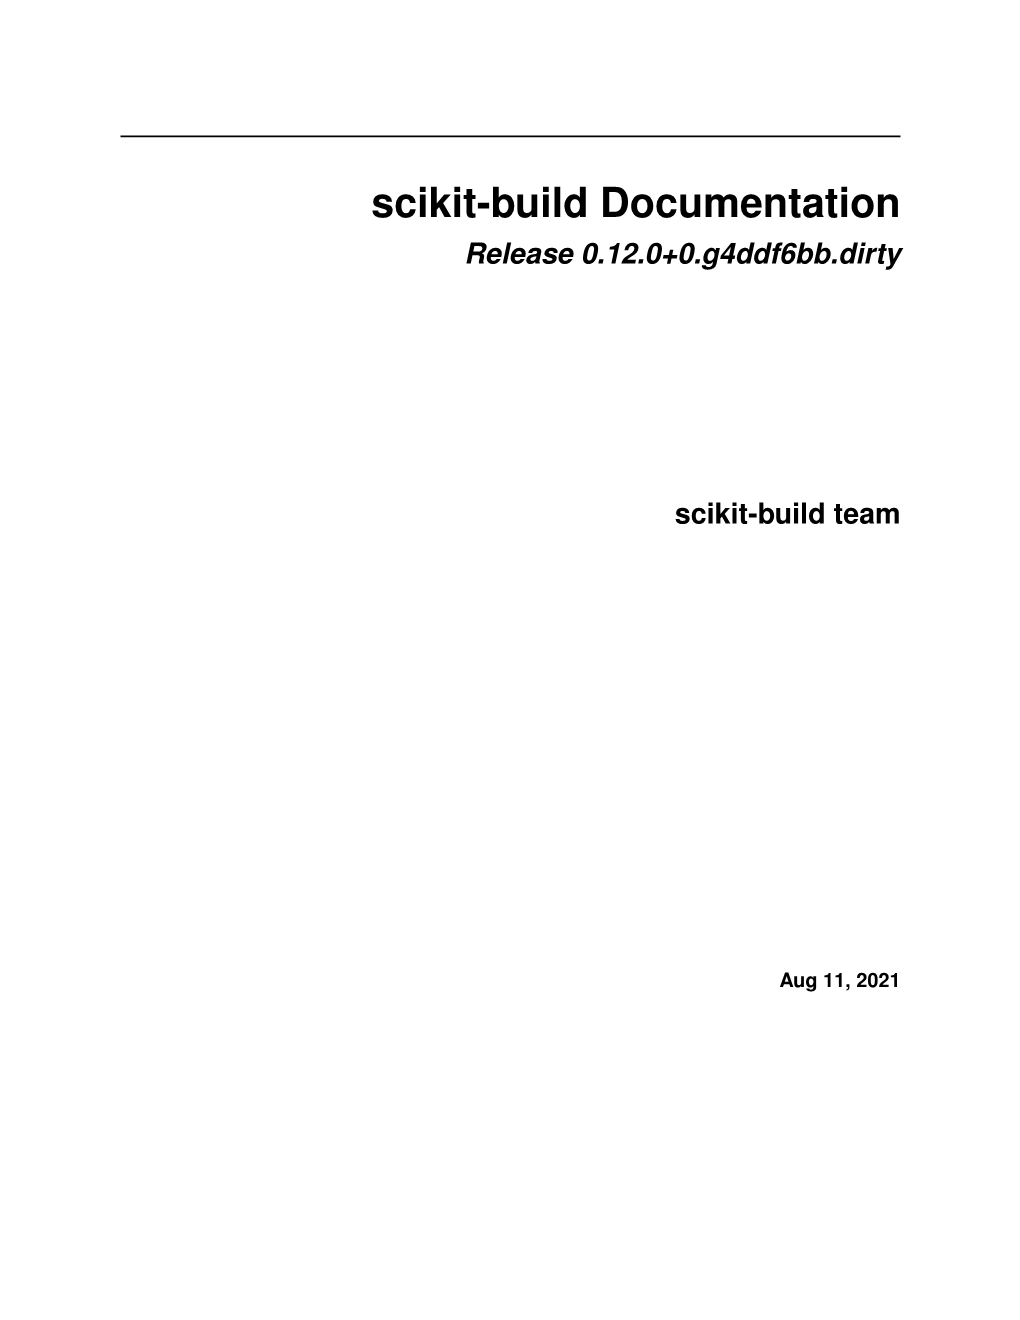 Scikit-Build Documentation Release 0.12.0+0.G4ddf6bb.Dirty